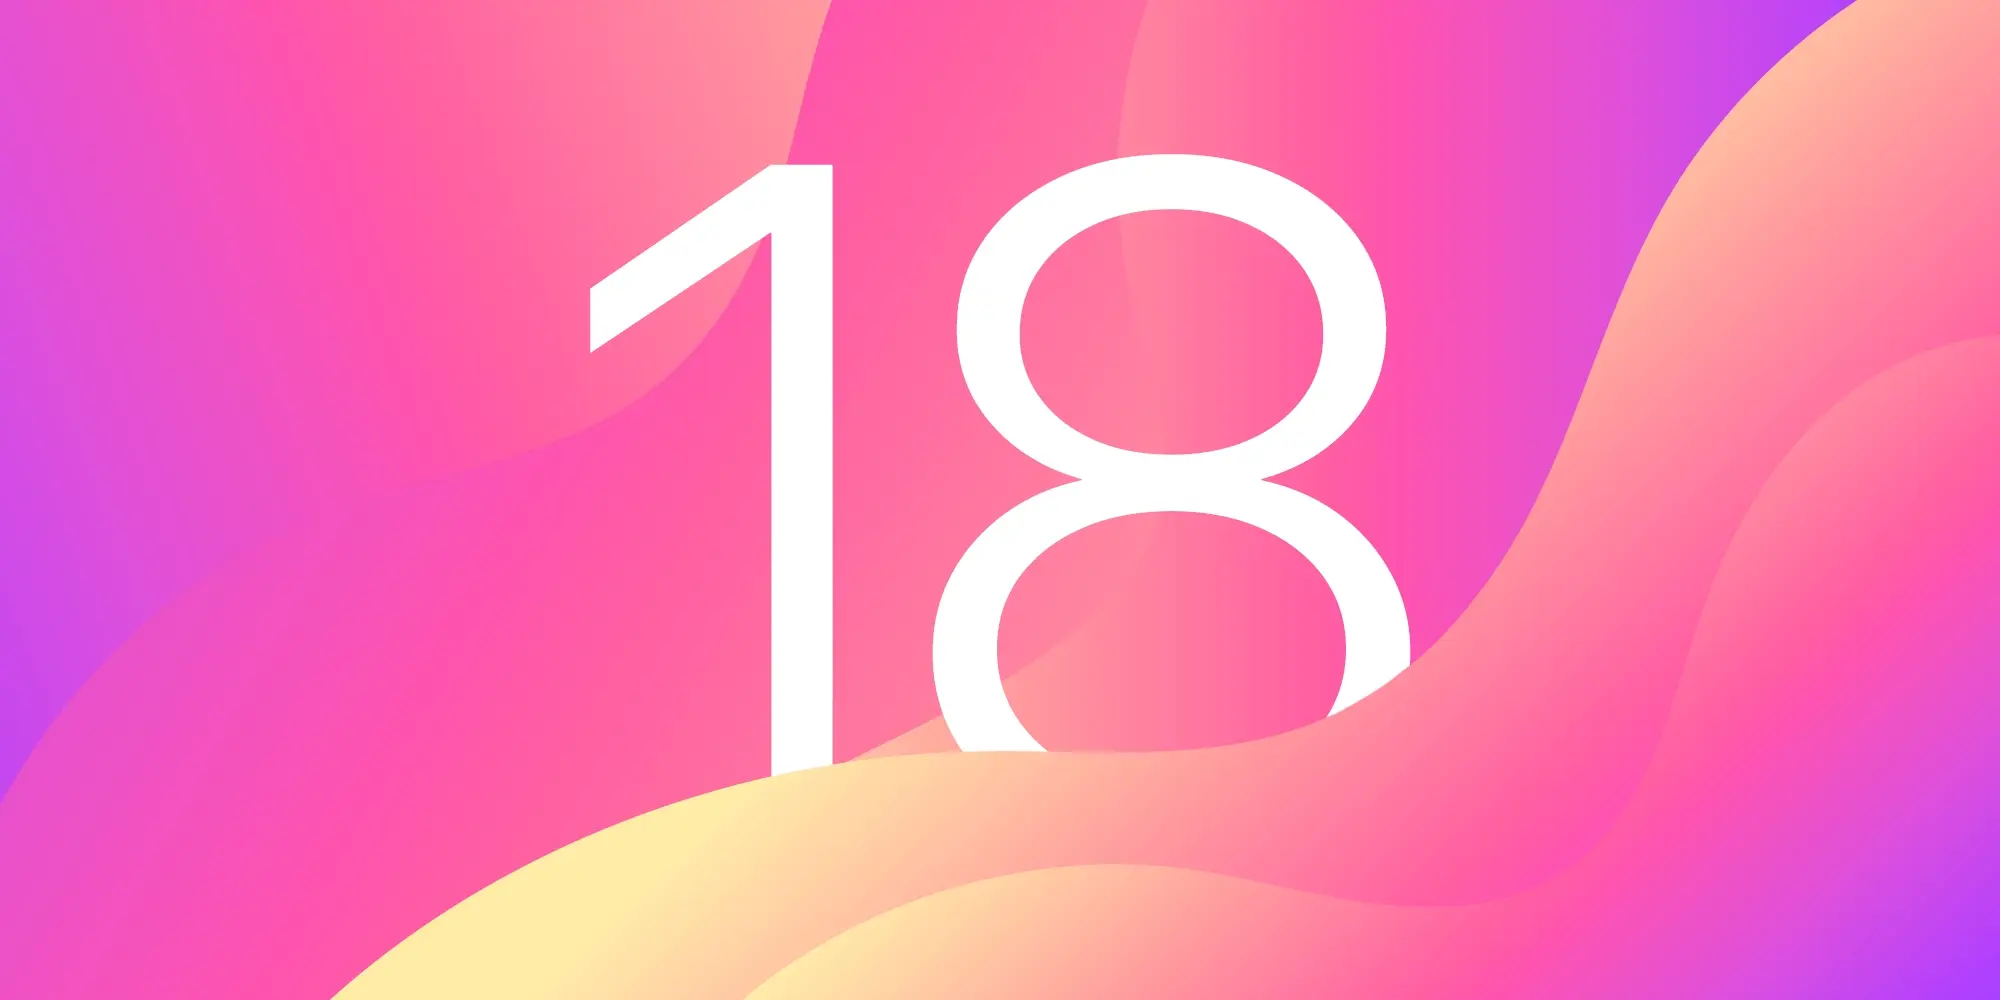 iOS18 Features